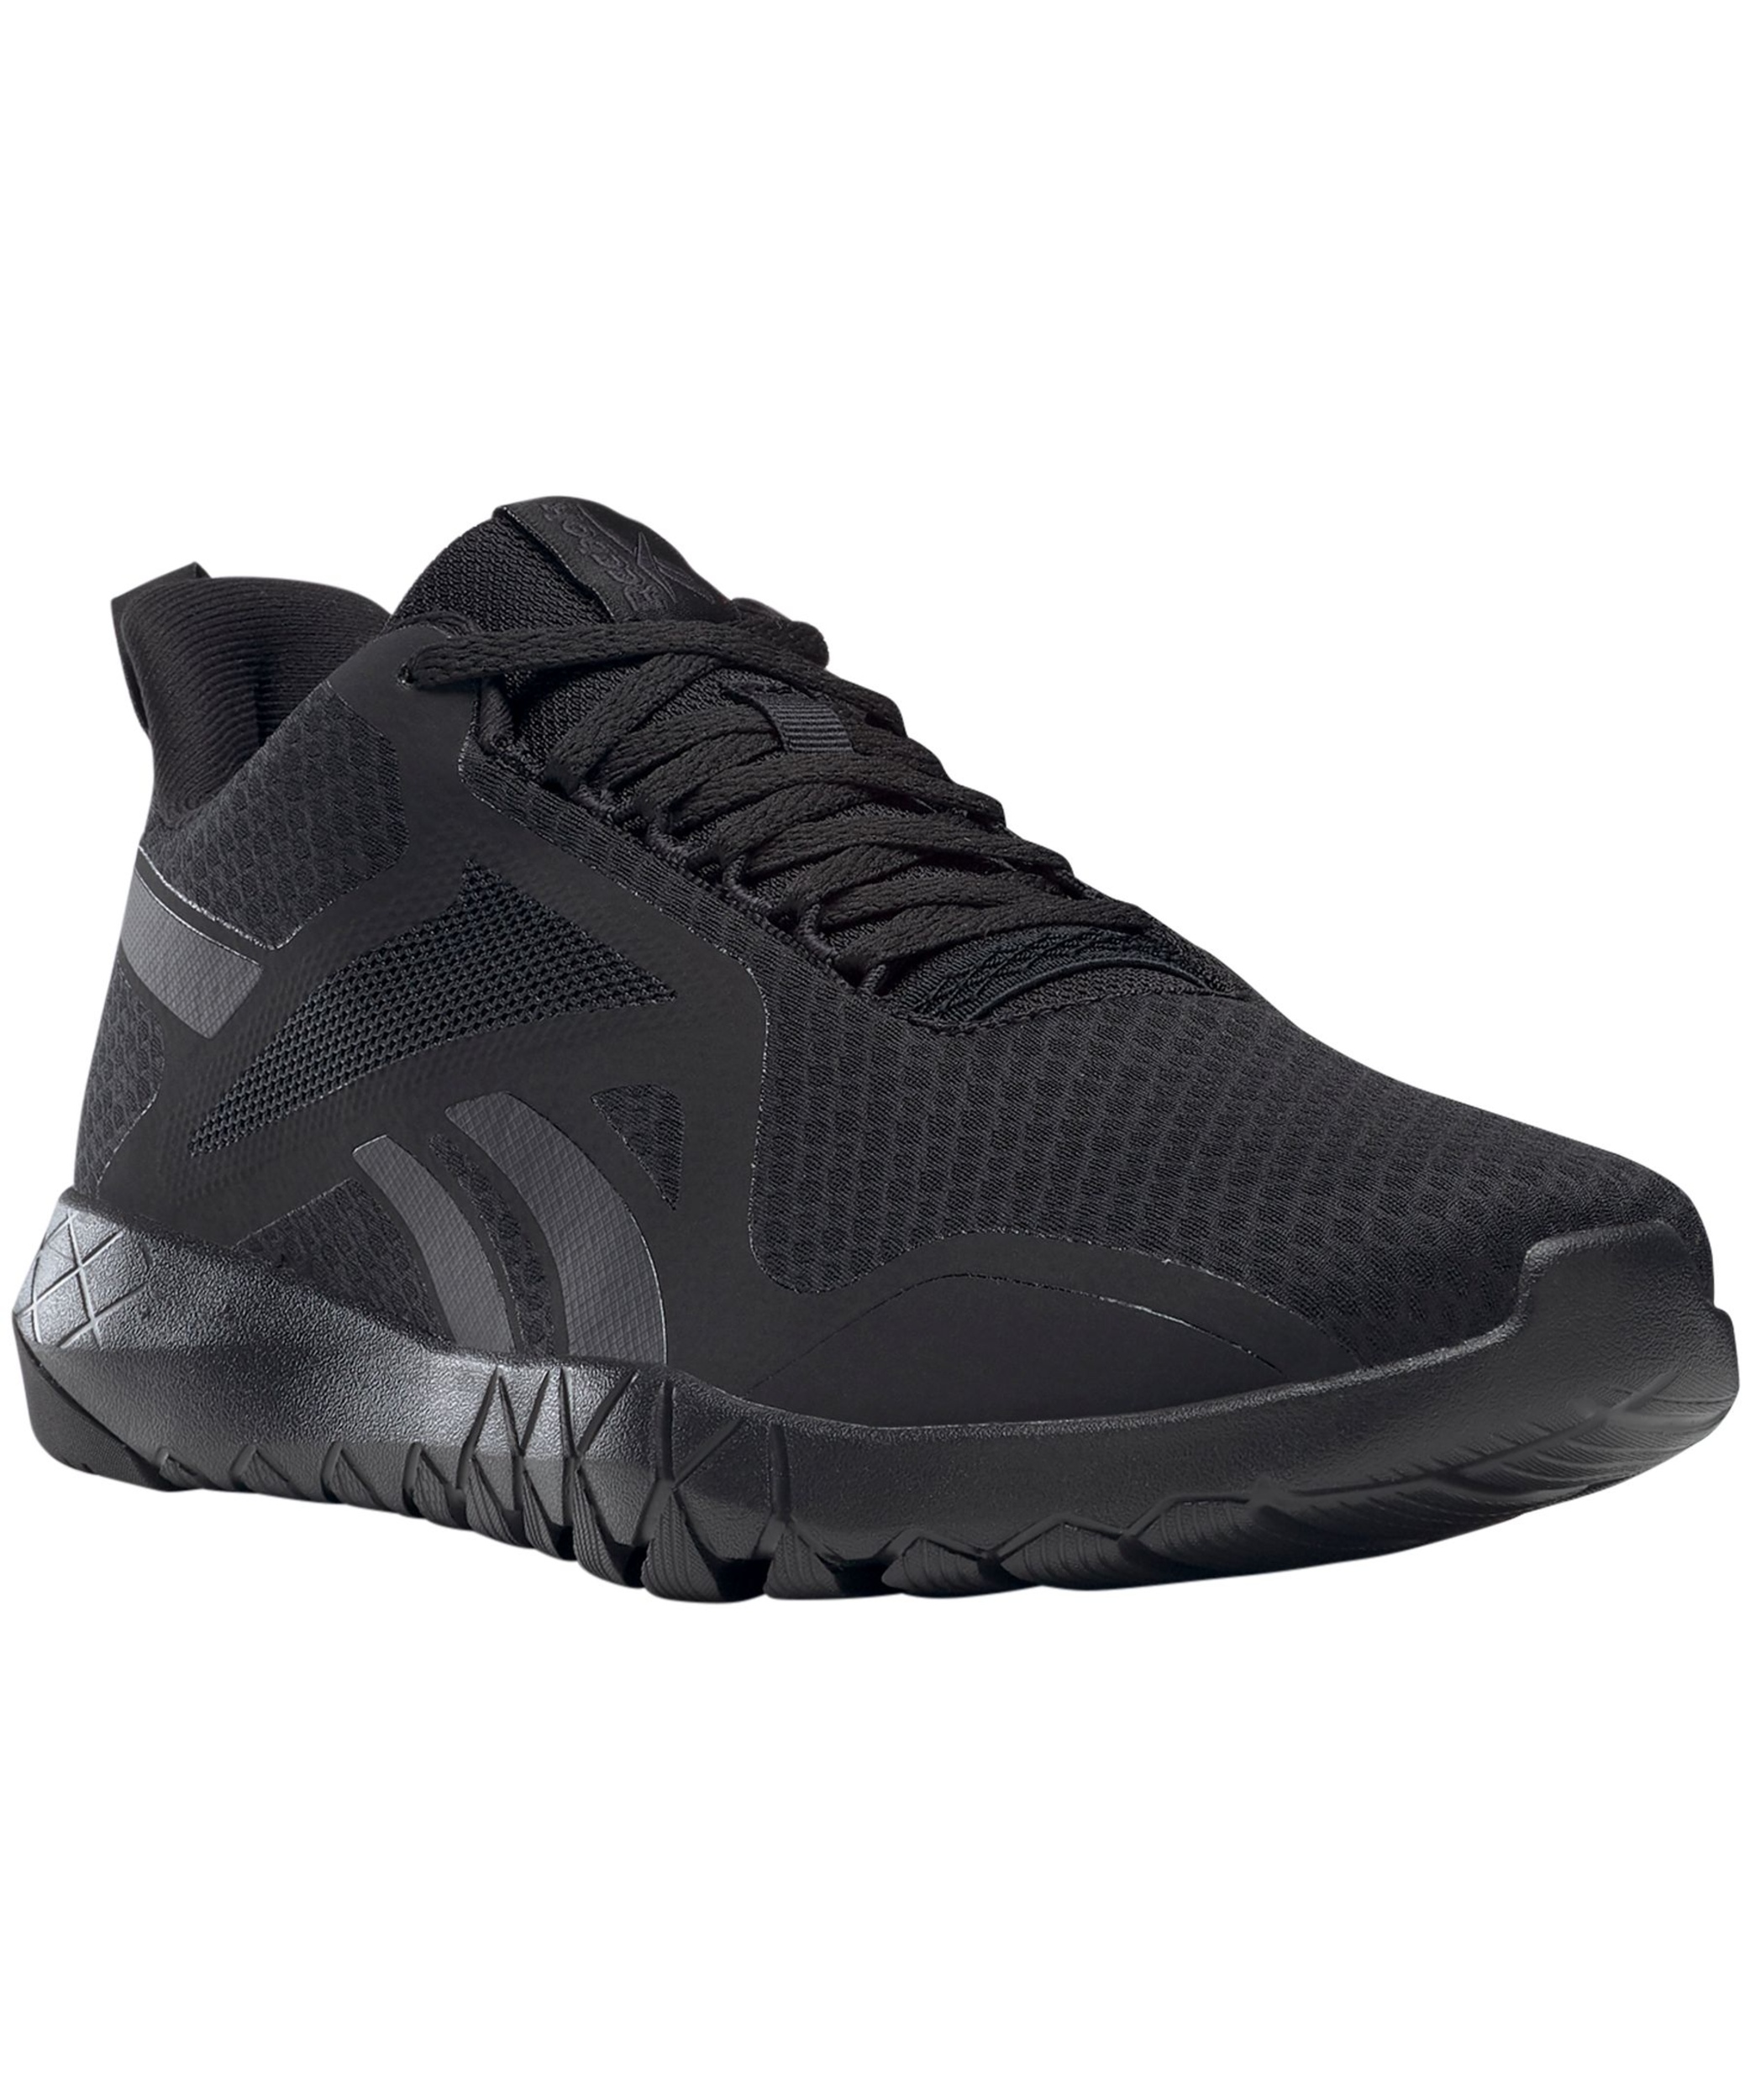 Reebok Men's Flexagon Force 3.0 Wide Fit Trainer Shoes- Black/Black | Marks